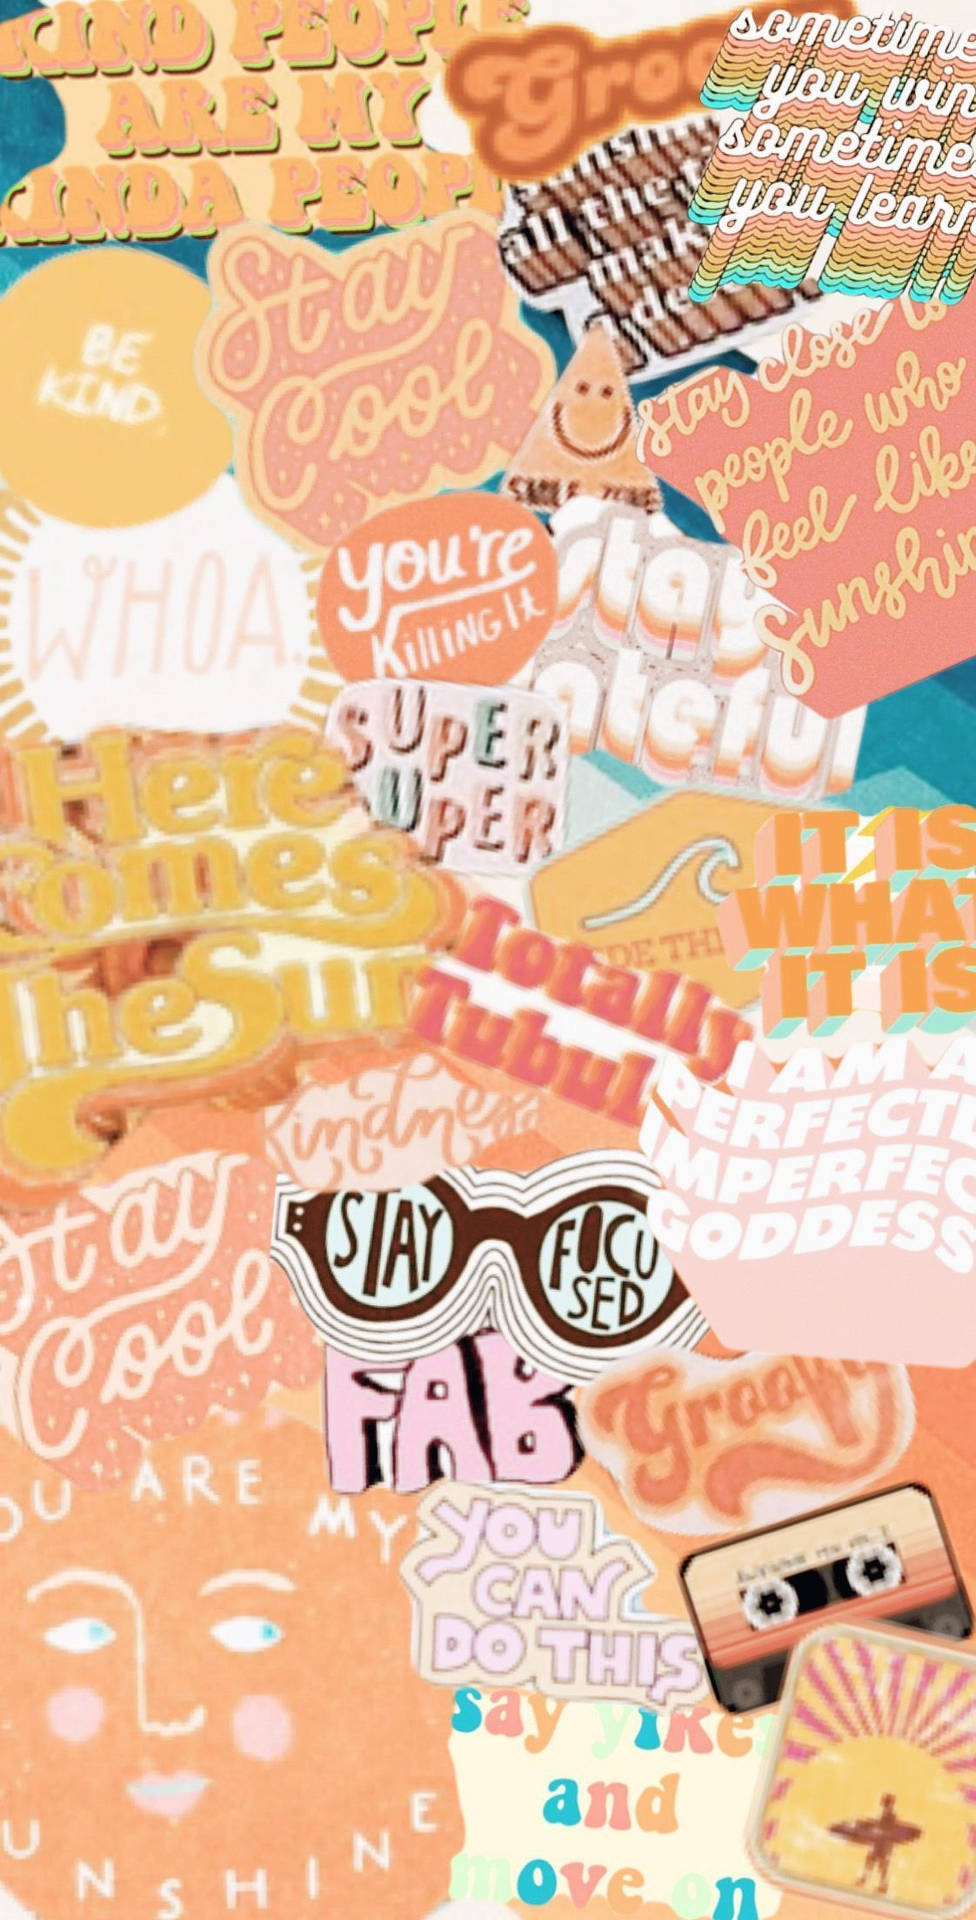 Aesthetic Vsco Collage With Orange Theme